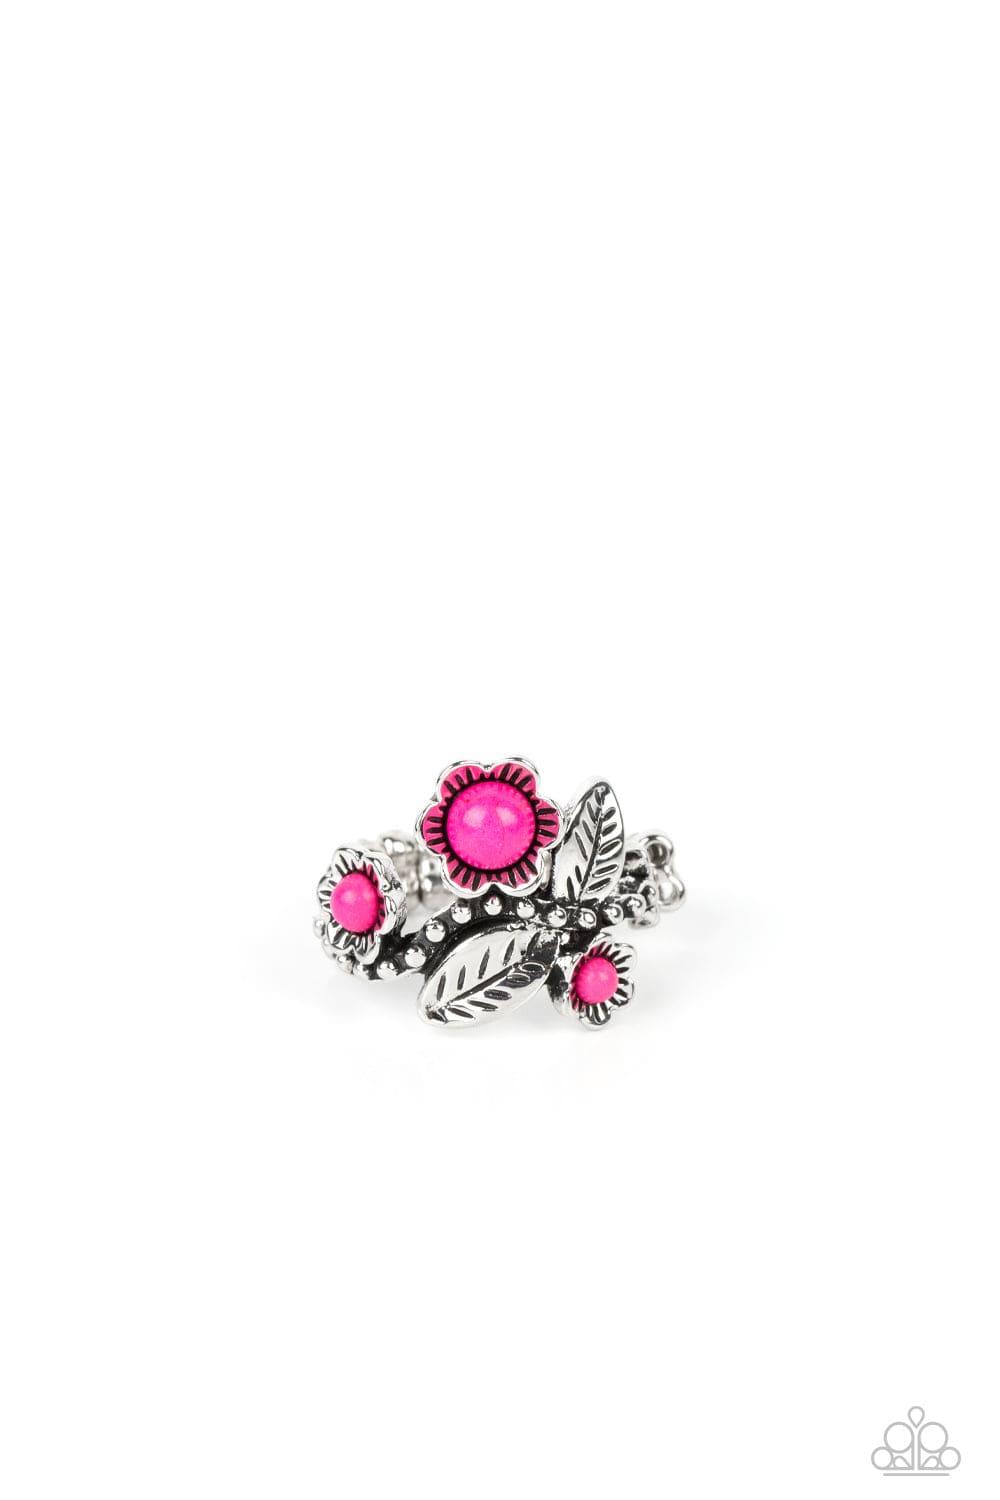 Paparazzi Accessories - Wonderland Wildflower - Pink Dainty Ring - Bling by JessieK